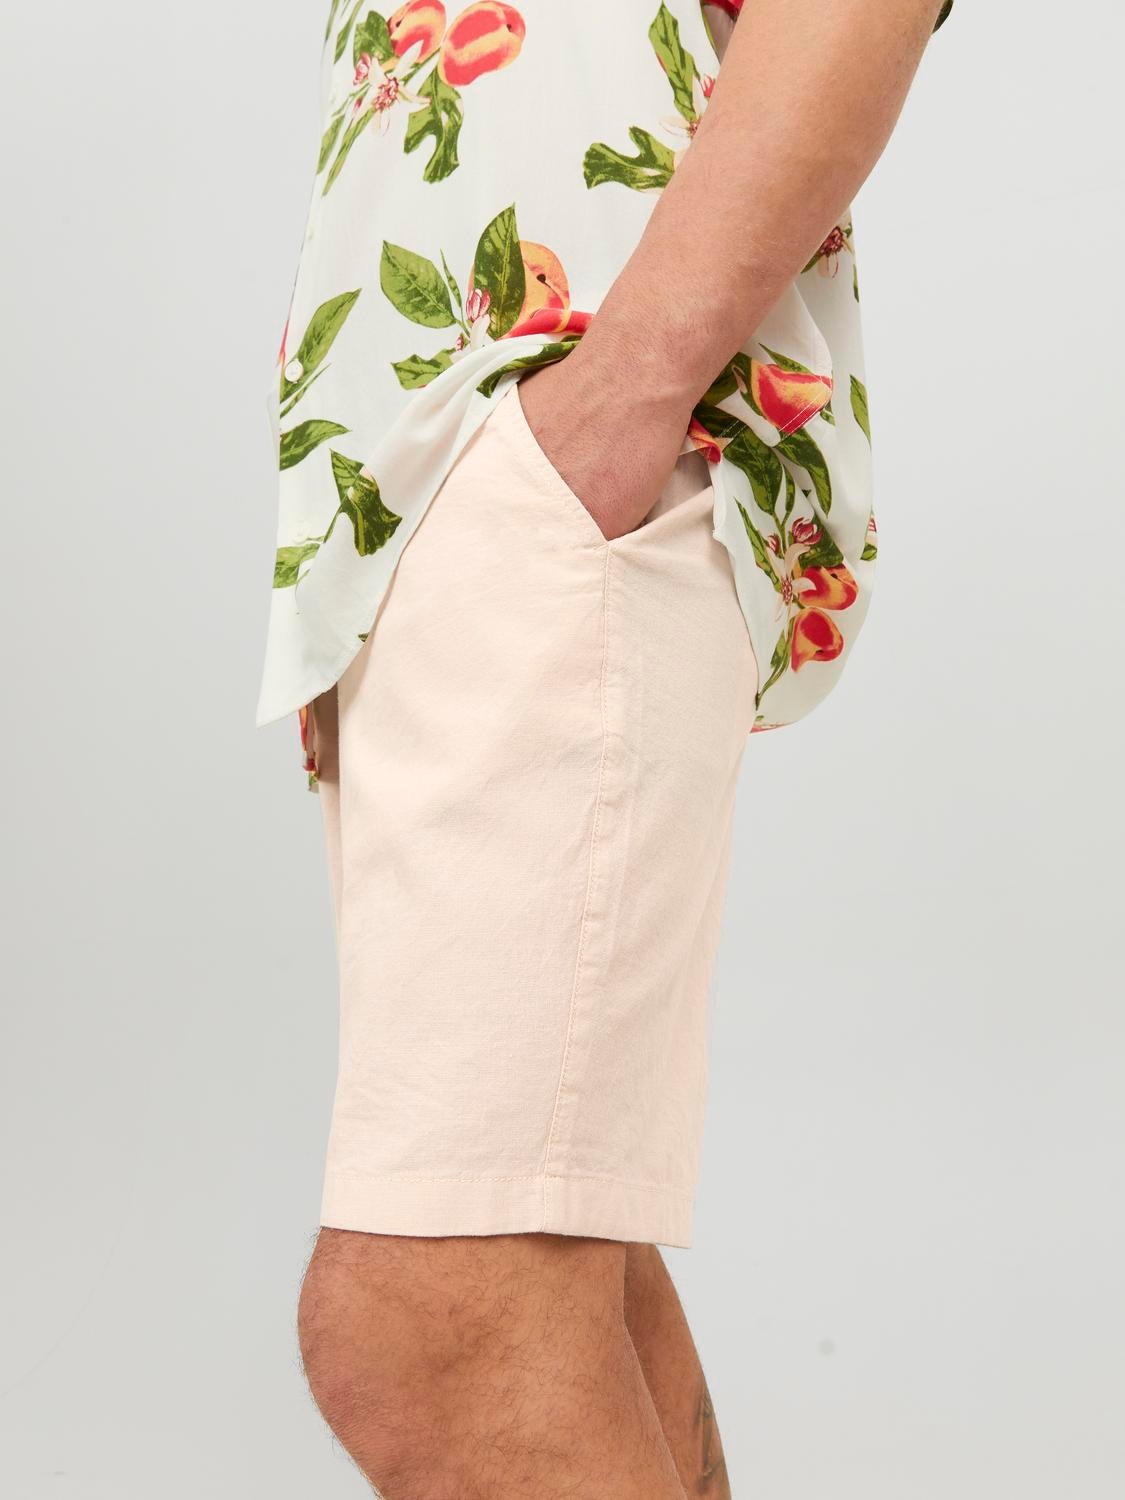 Jack & Jones Plus Size Regular Fit Chino shorts -Moon Beam - 12235793